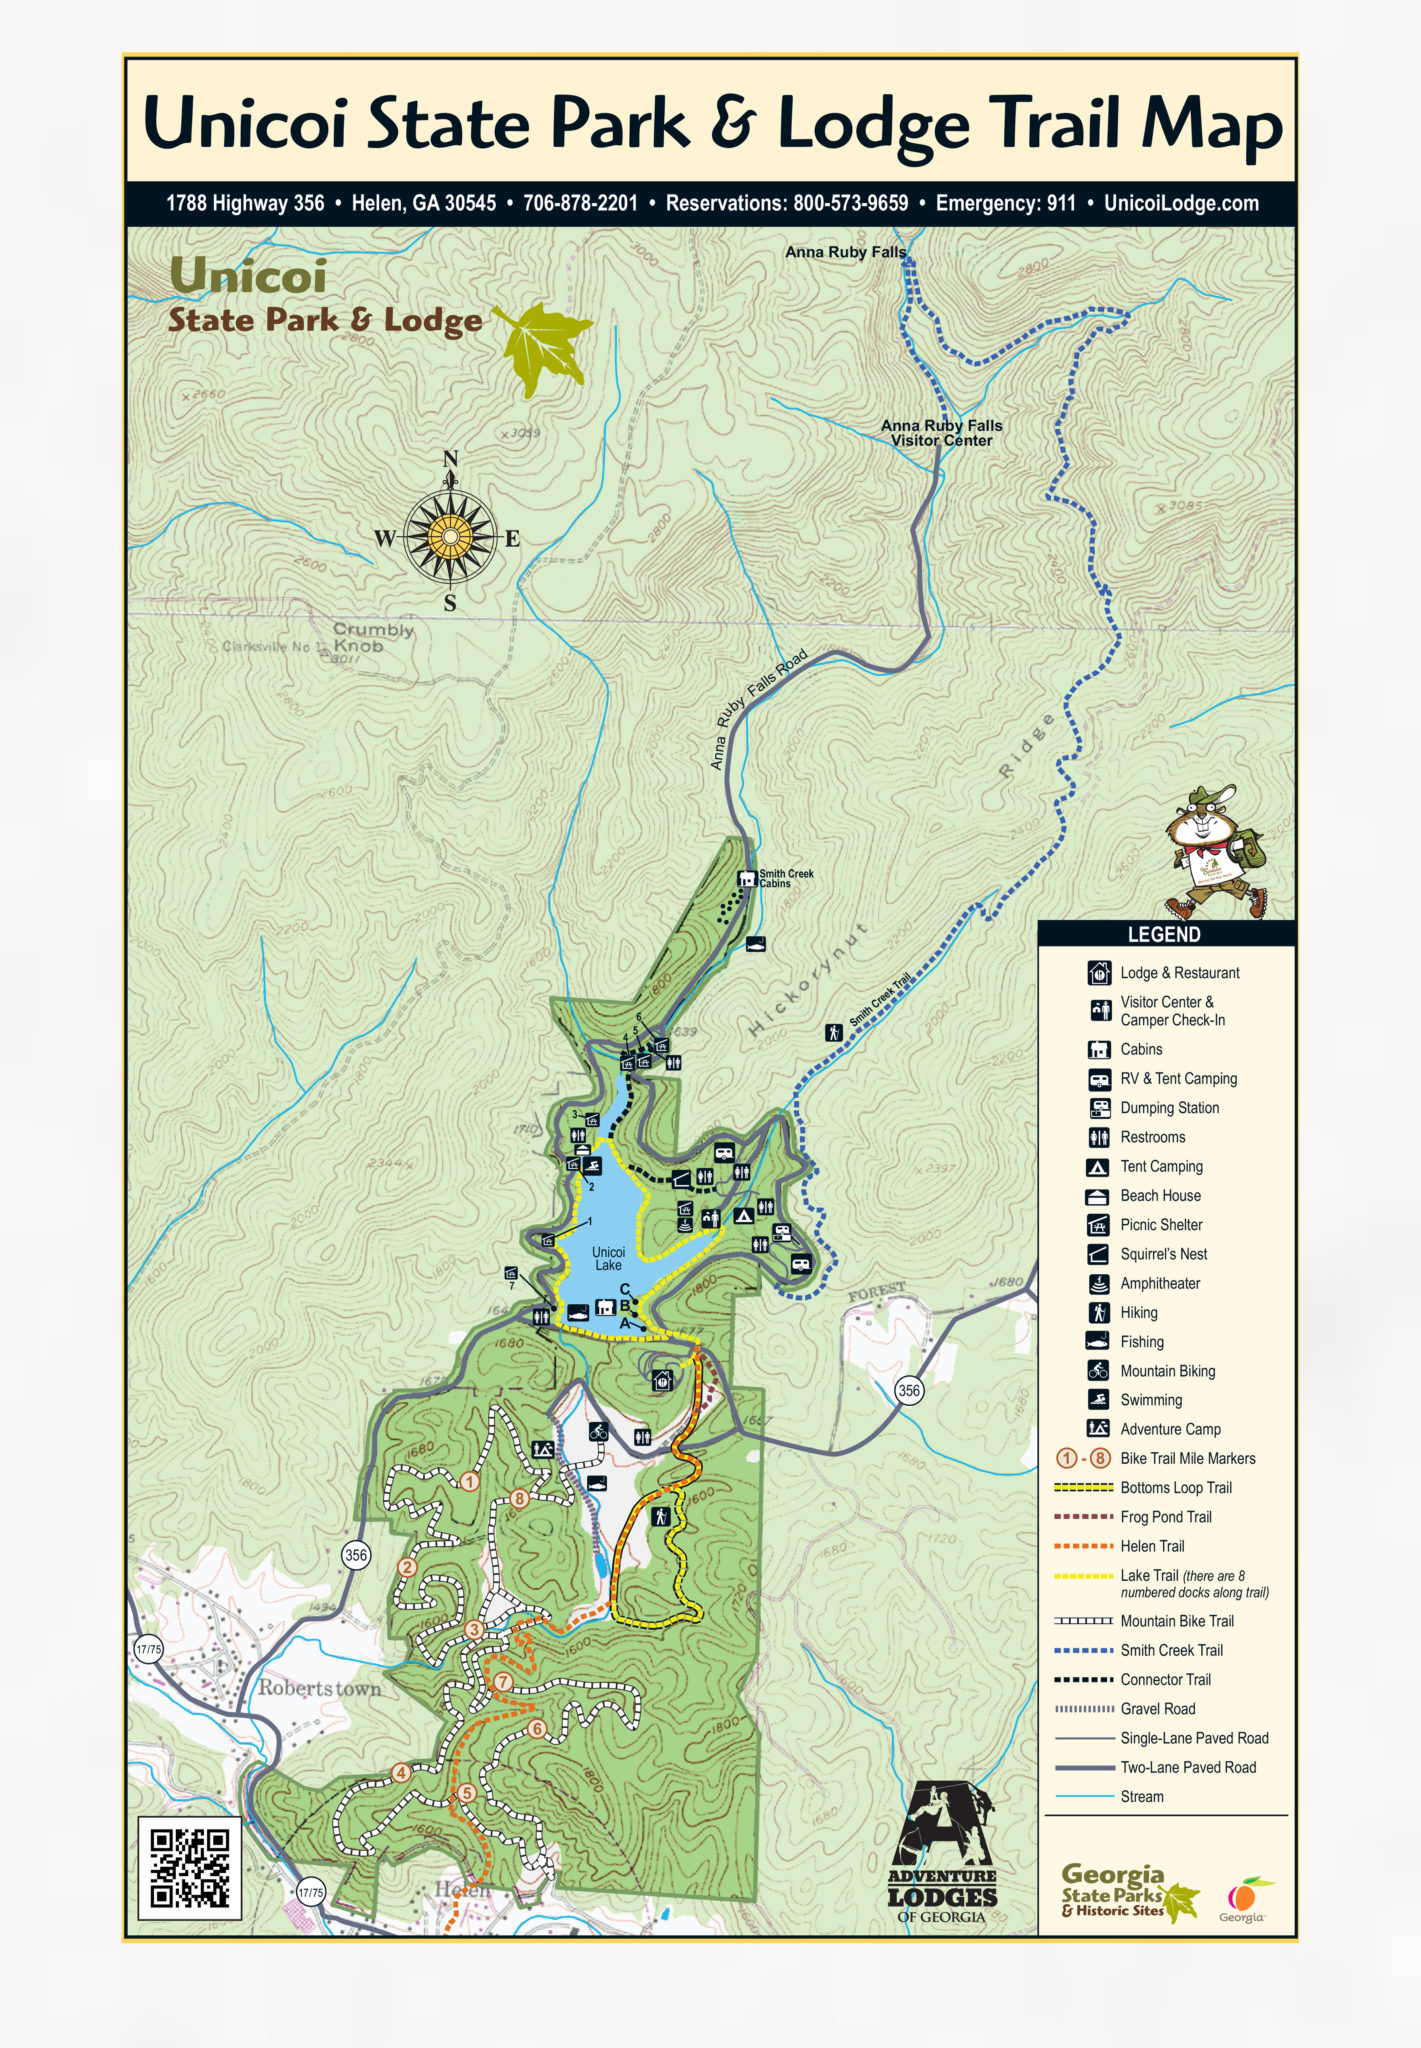 Park Map - Unicoi State Park & Lodge - Helen, GA